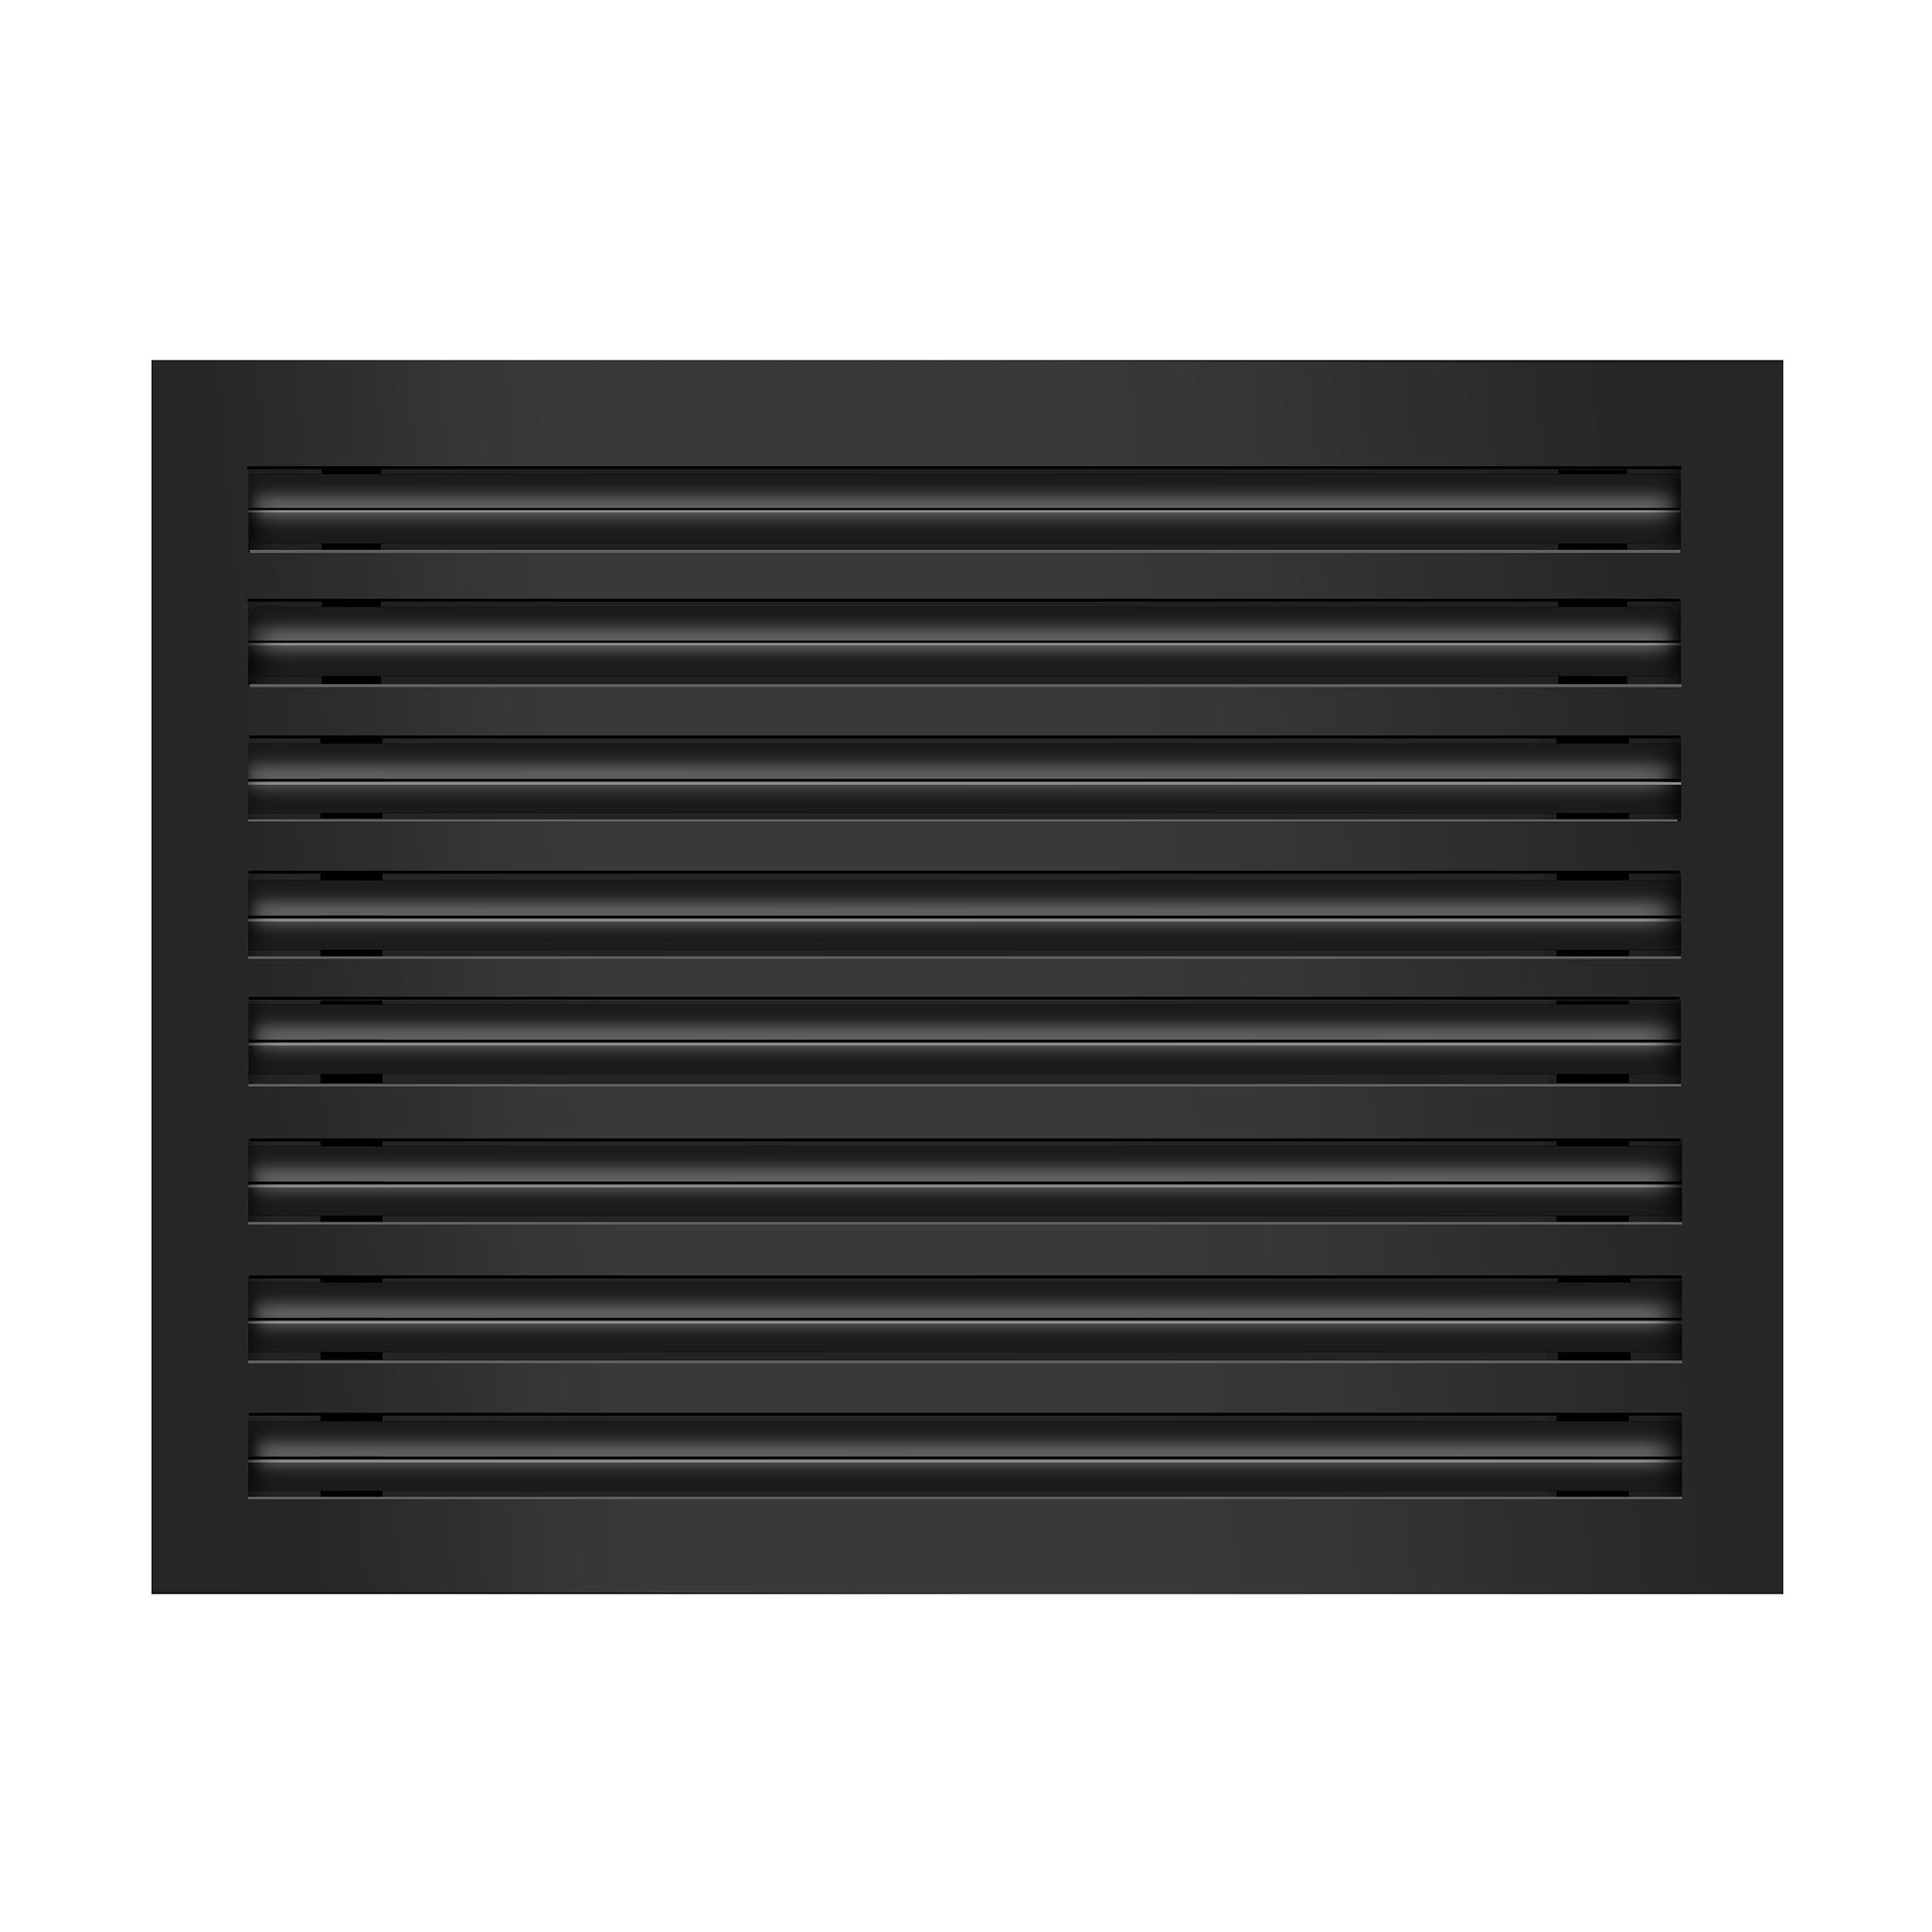 Front View of 22x16 Modern Air Vent Cover Black - 22x16 Standard Linear Slot Diffuser Black - Texas Buildmart